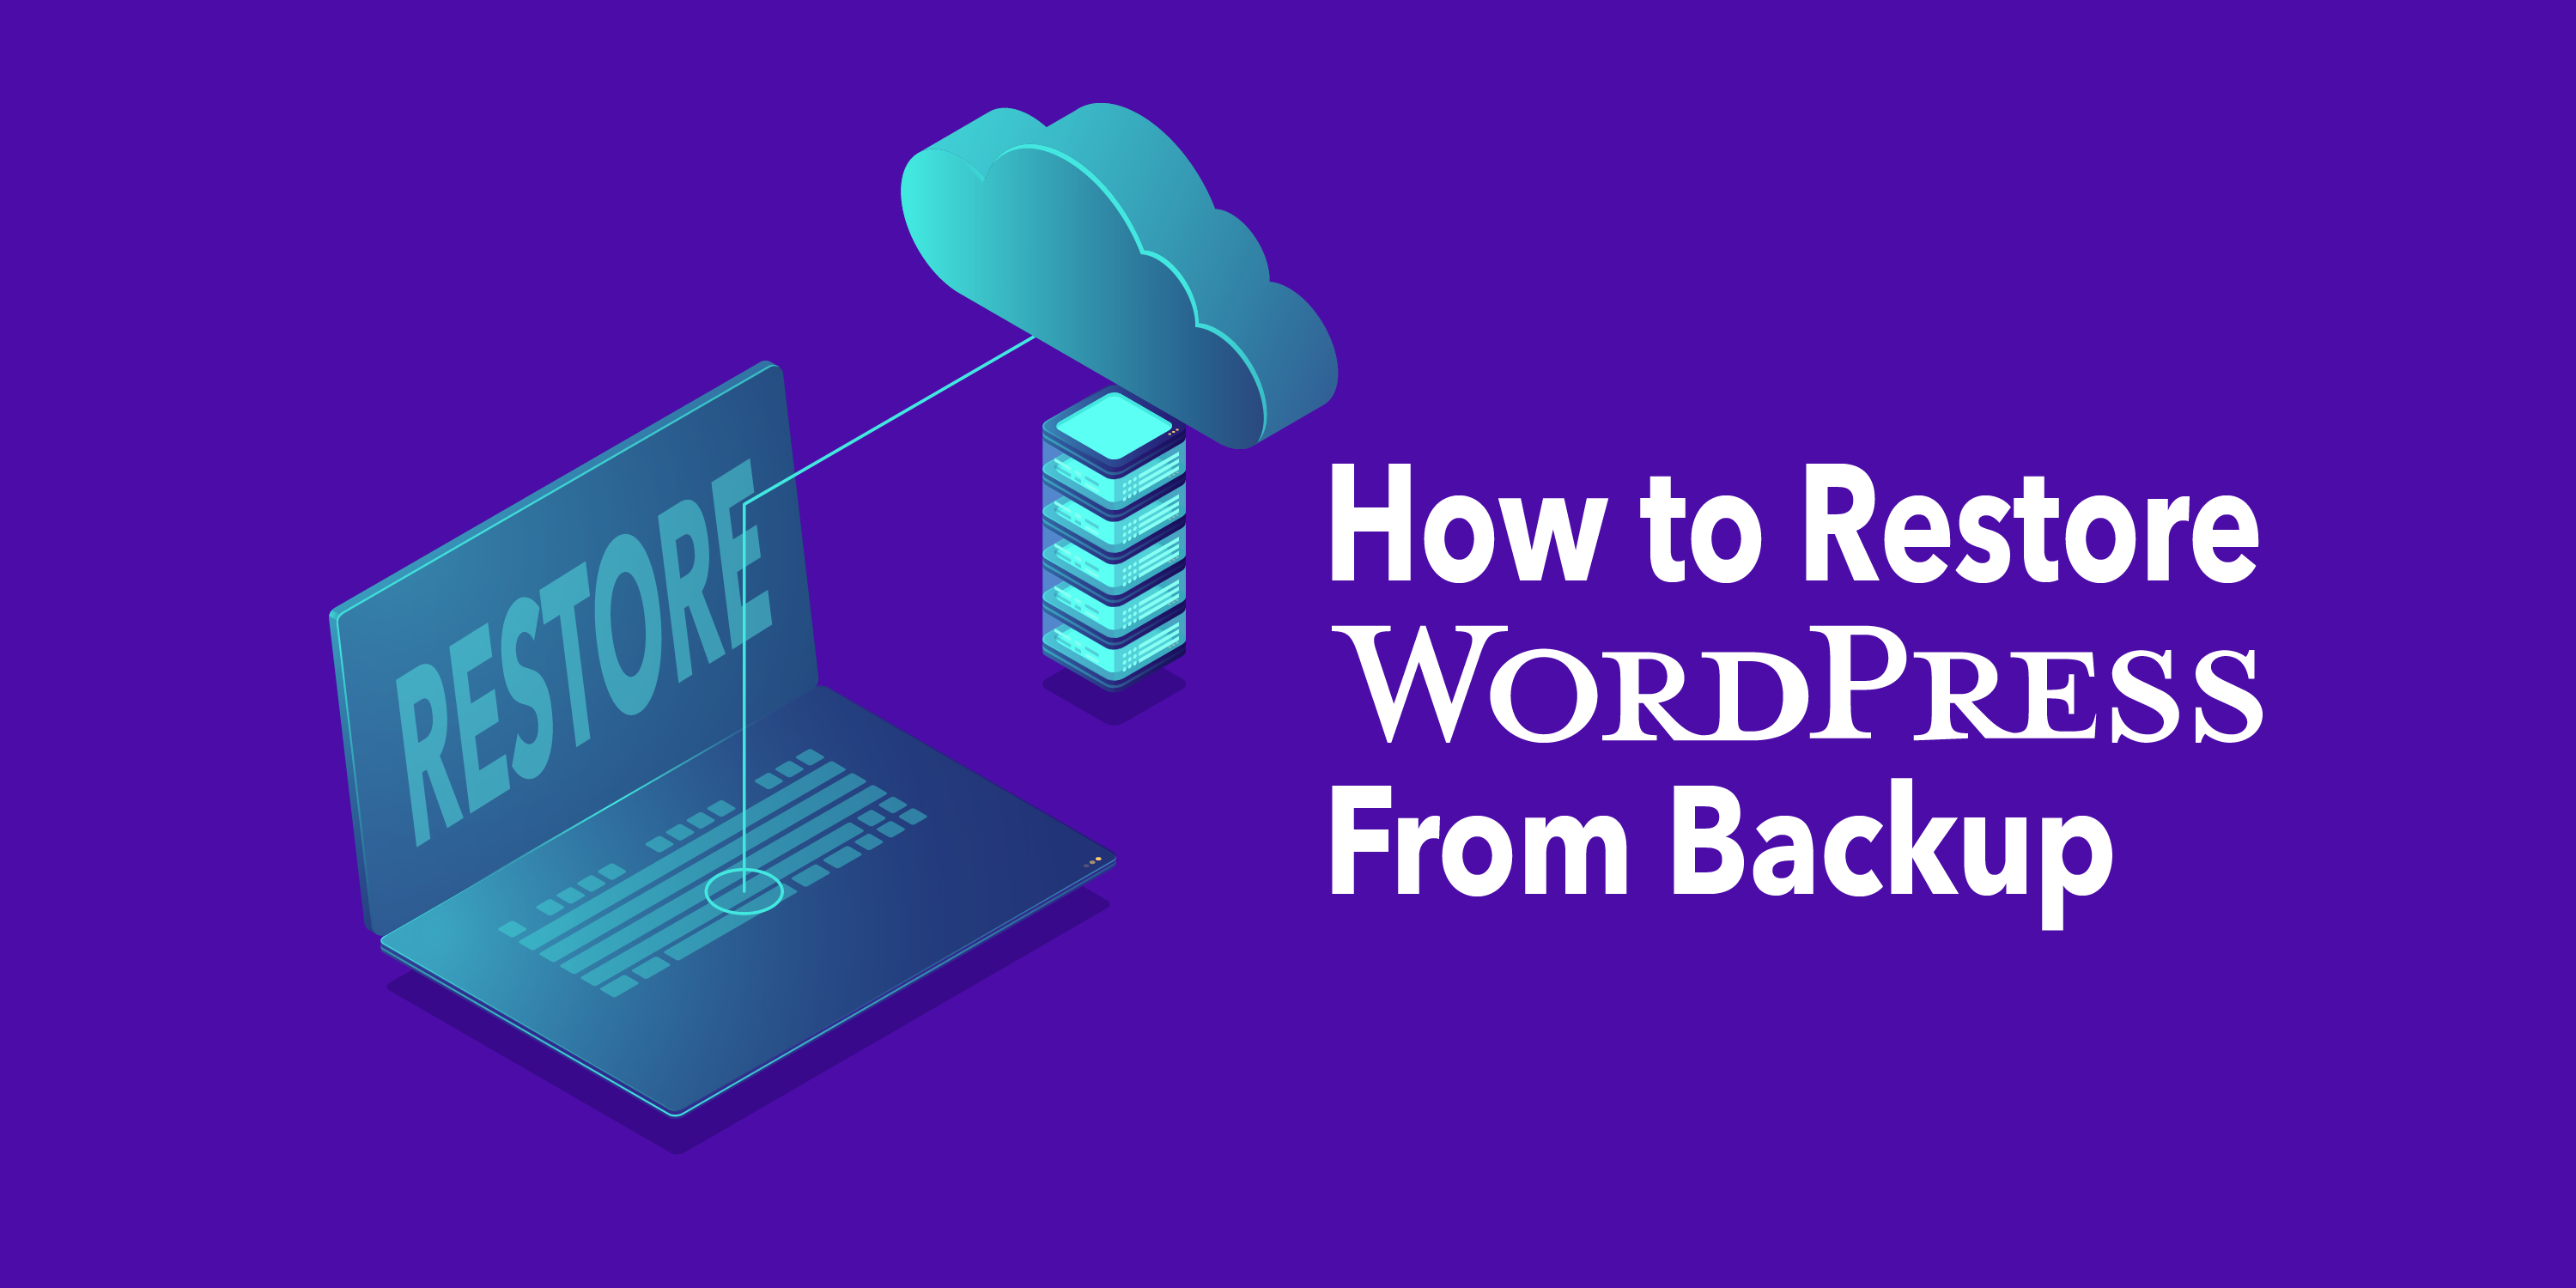 Restoring WordPress from a Backup